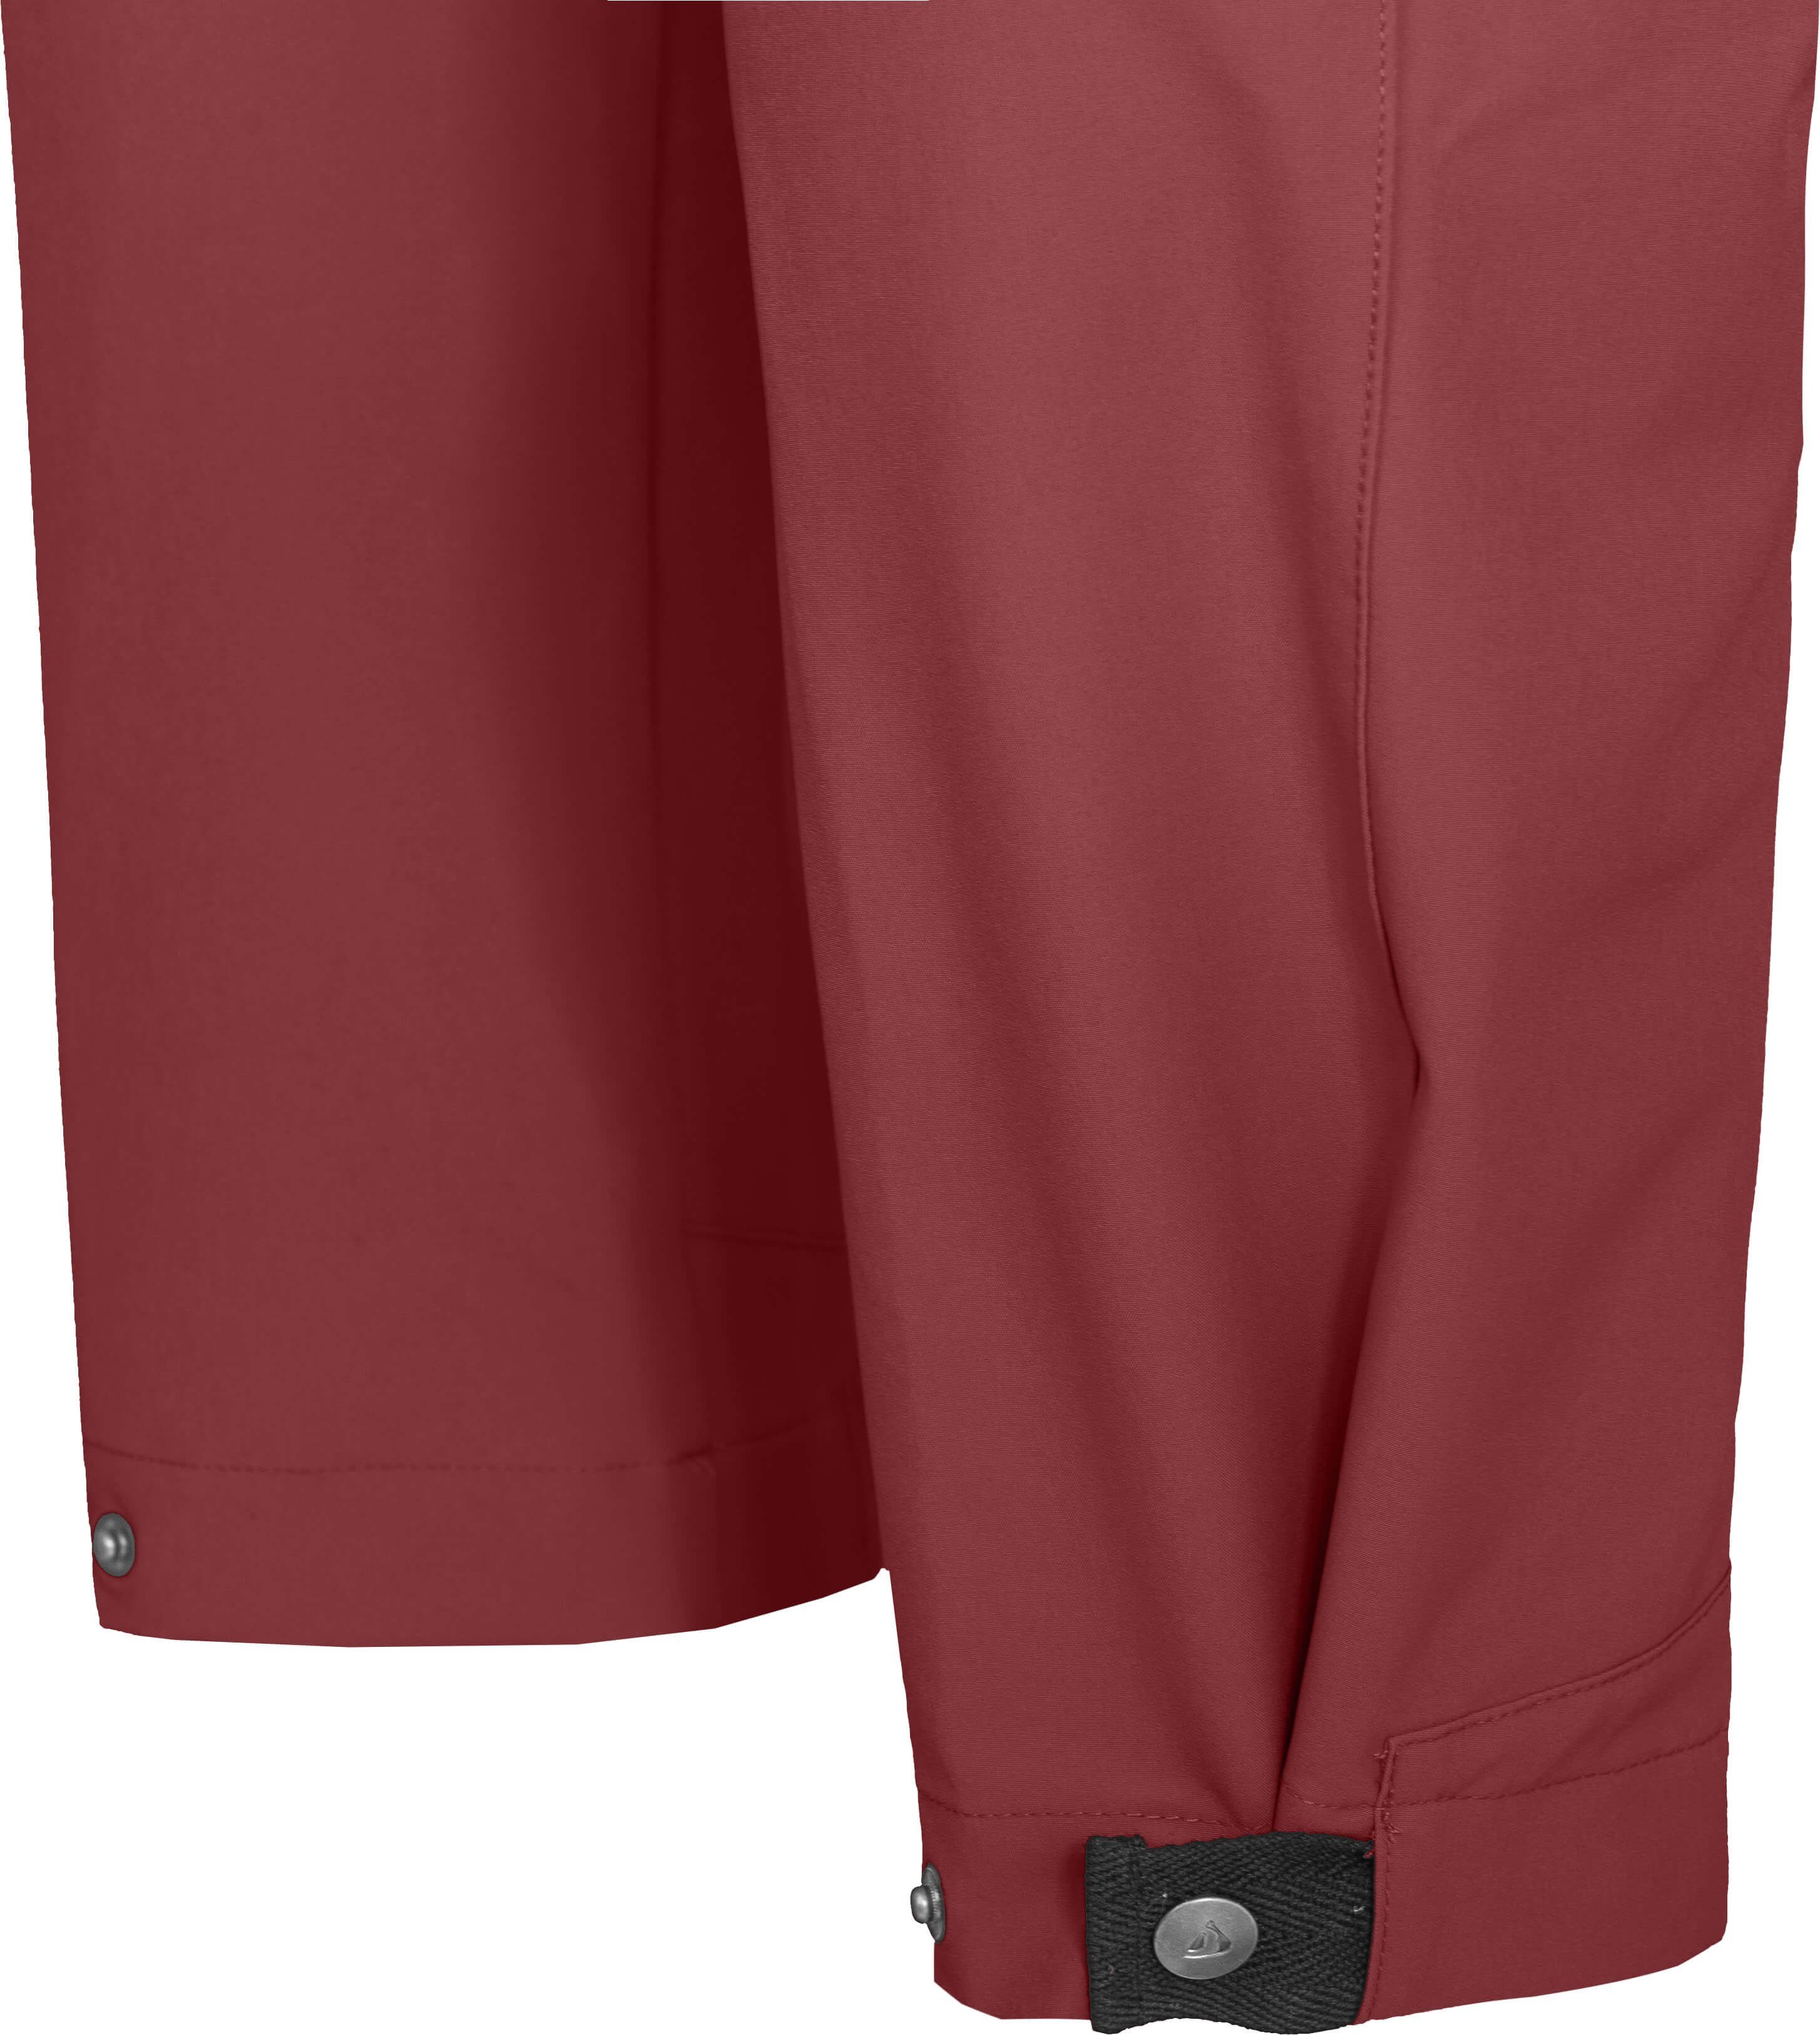 Bergson Outdoorhose Herren FROSLEV rot Normalgrößen, braun Taschen, elastisch, COMFORT recycelt, Wanderhose, 8